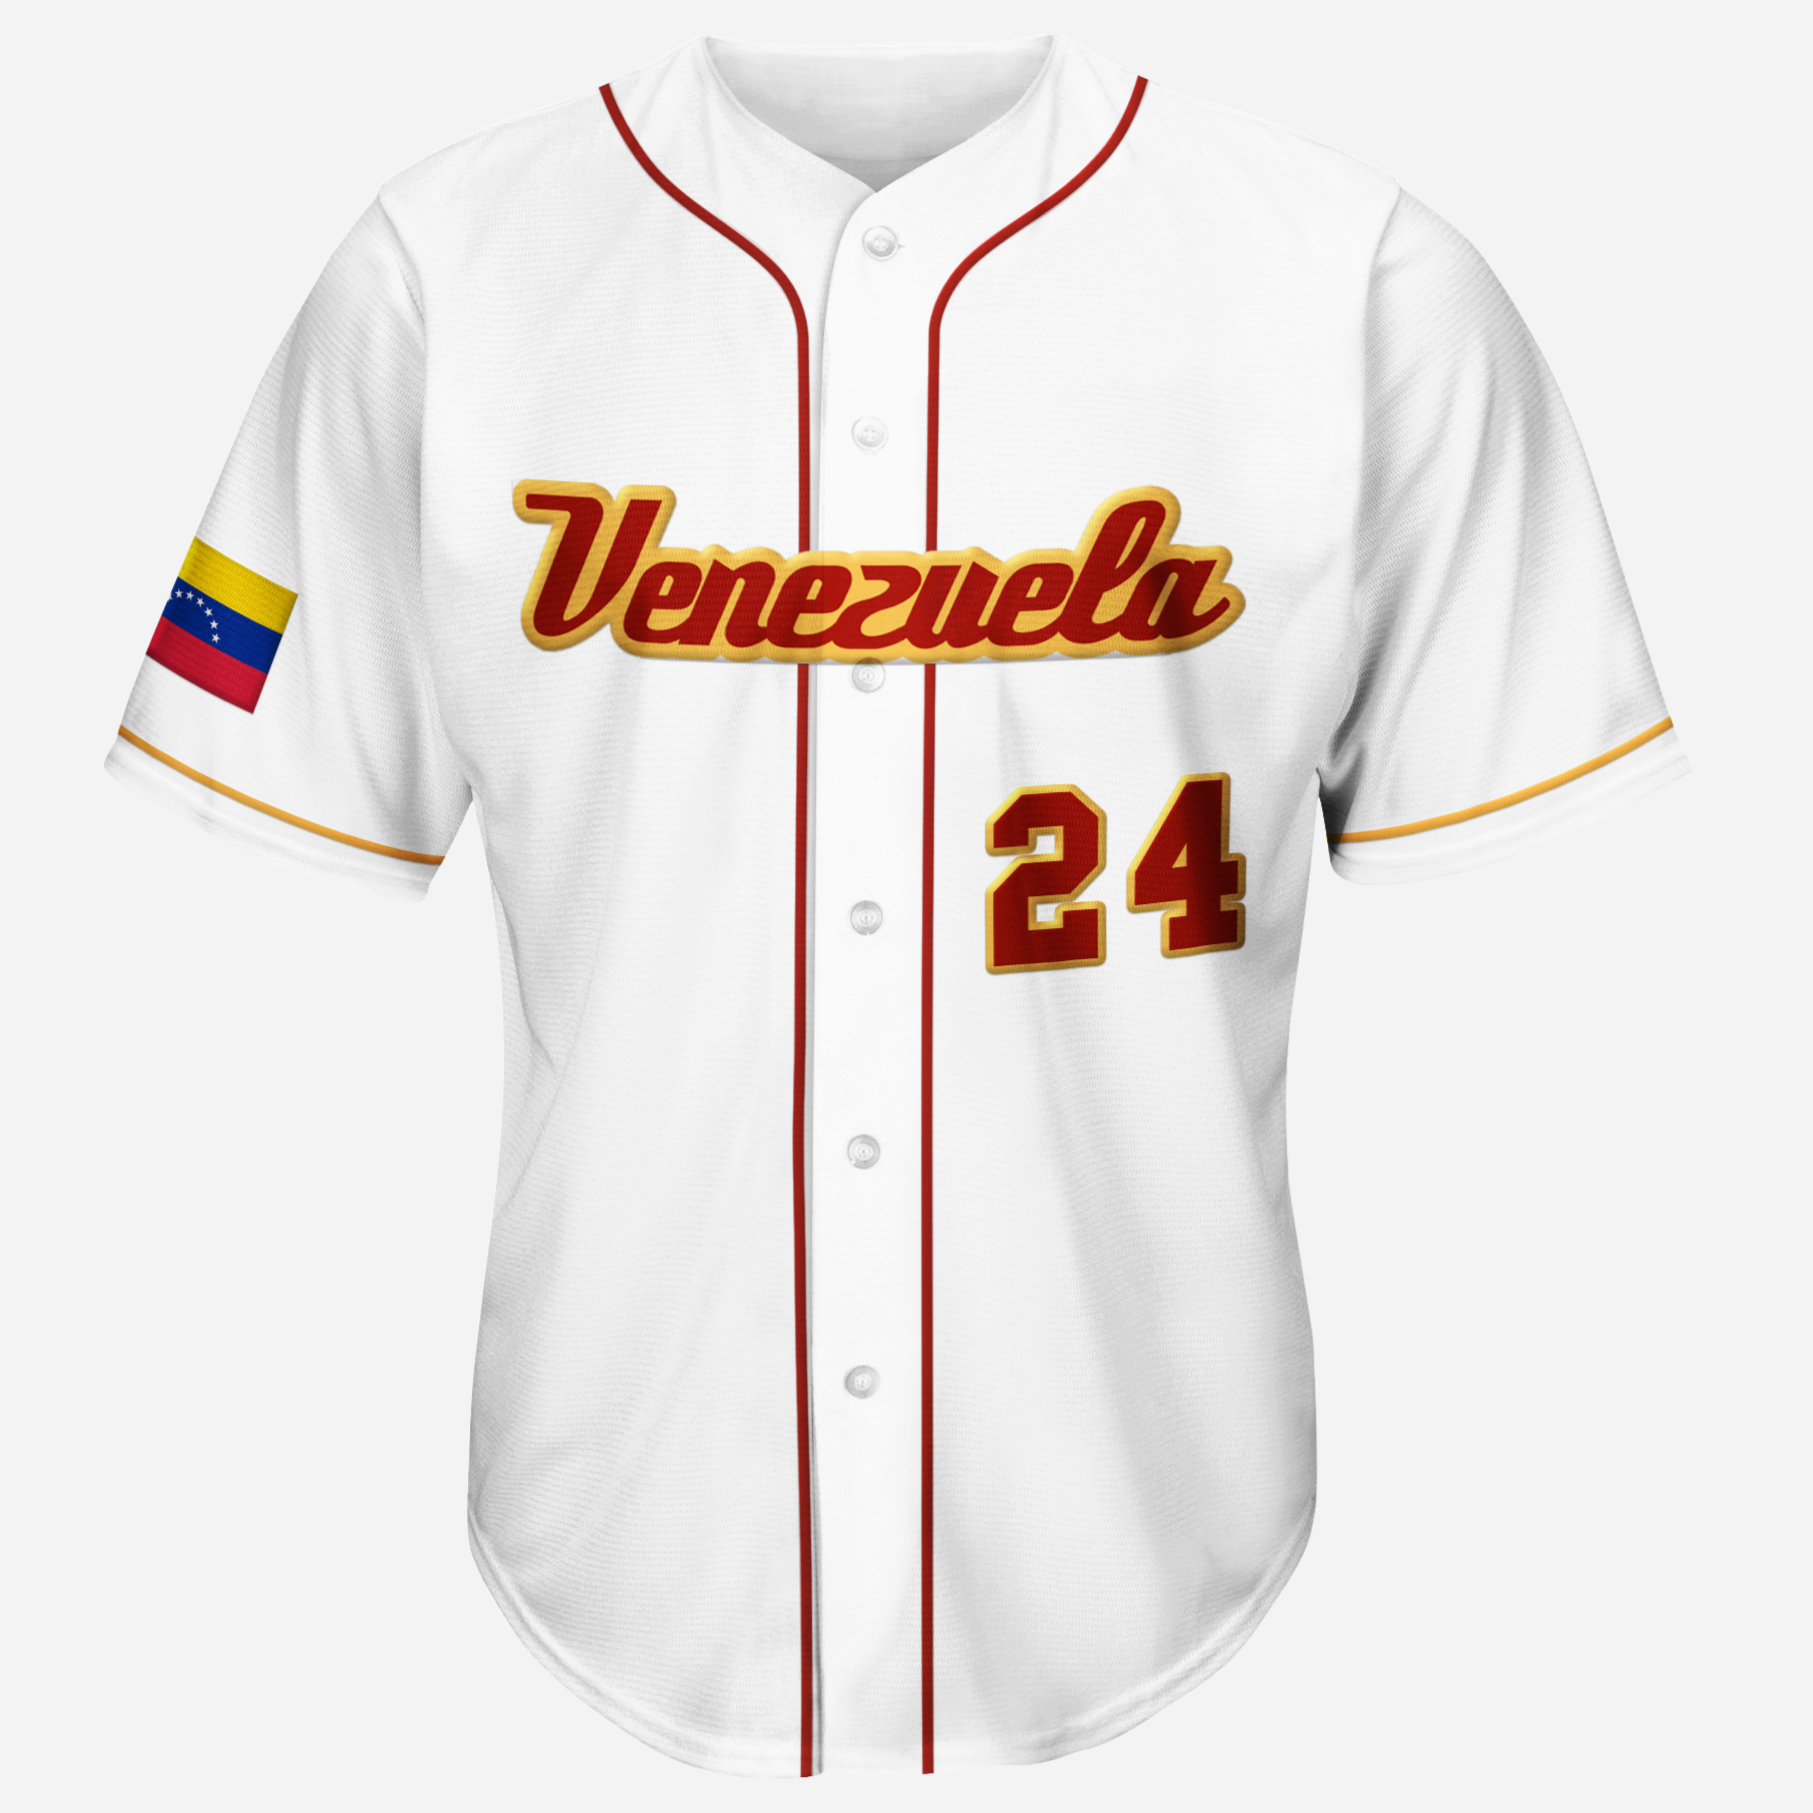 venezuela jersey